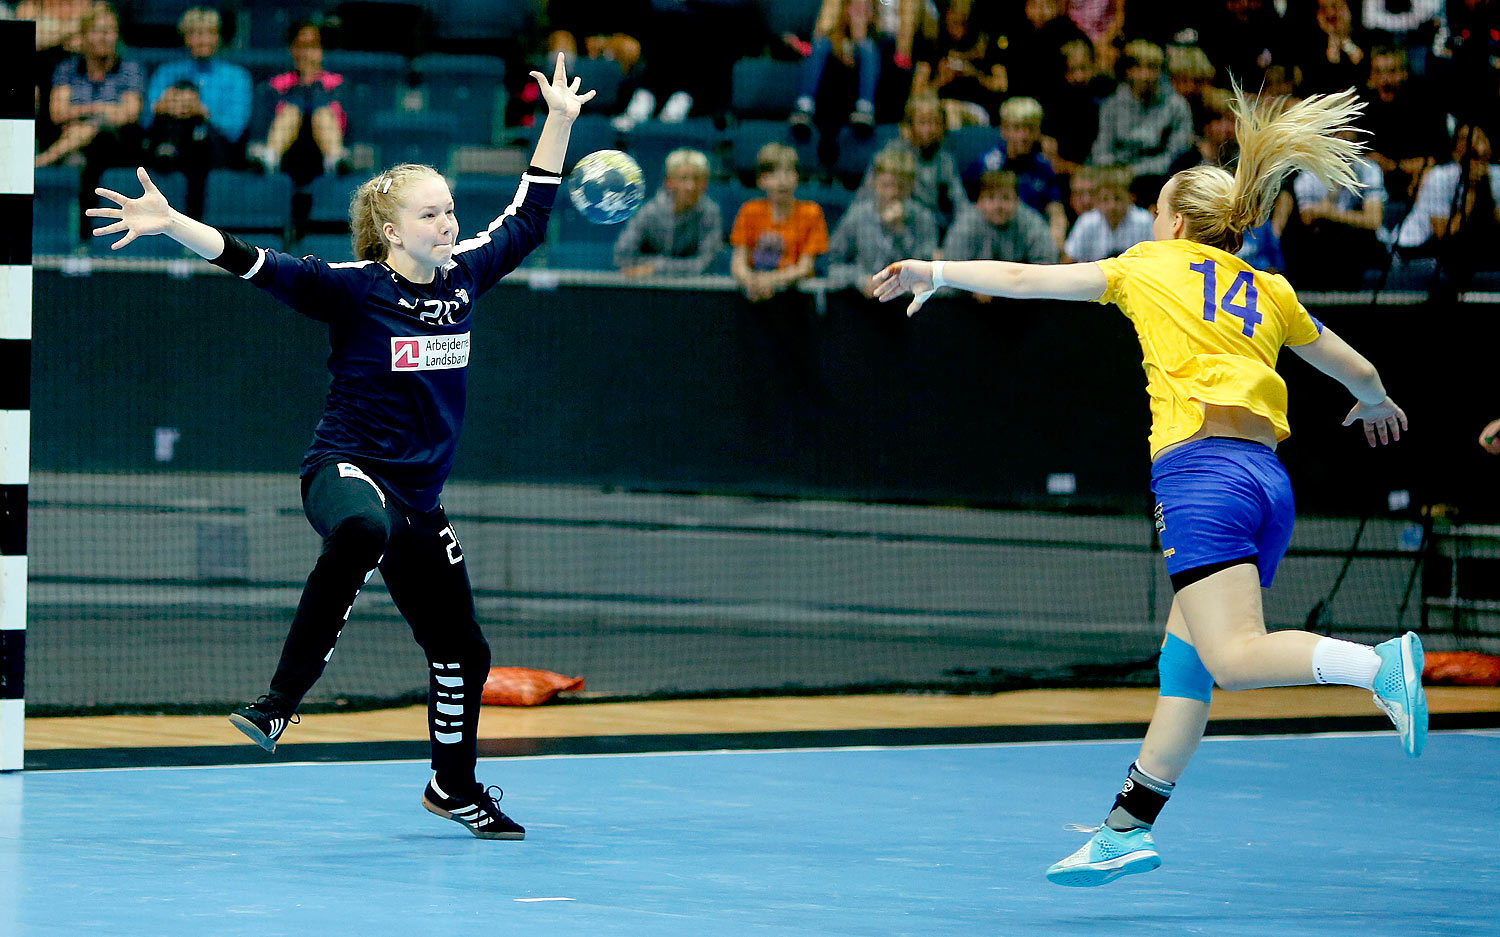 European Open W18 FINAL Denmark-Sweden 33-34,dam,Scandinavium,Göteborg,Sverige,Handboll,,2016,138719